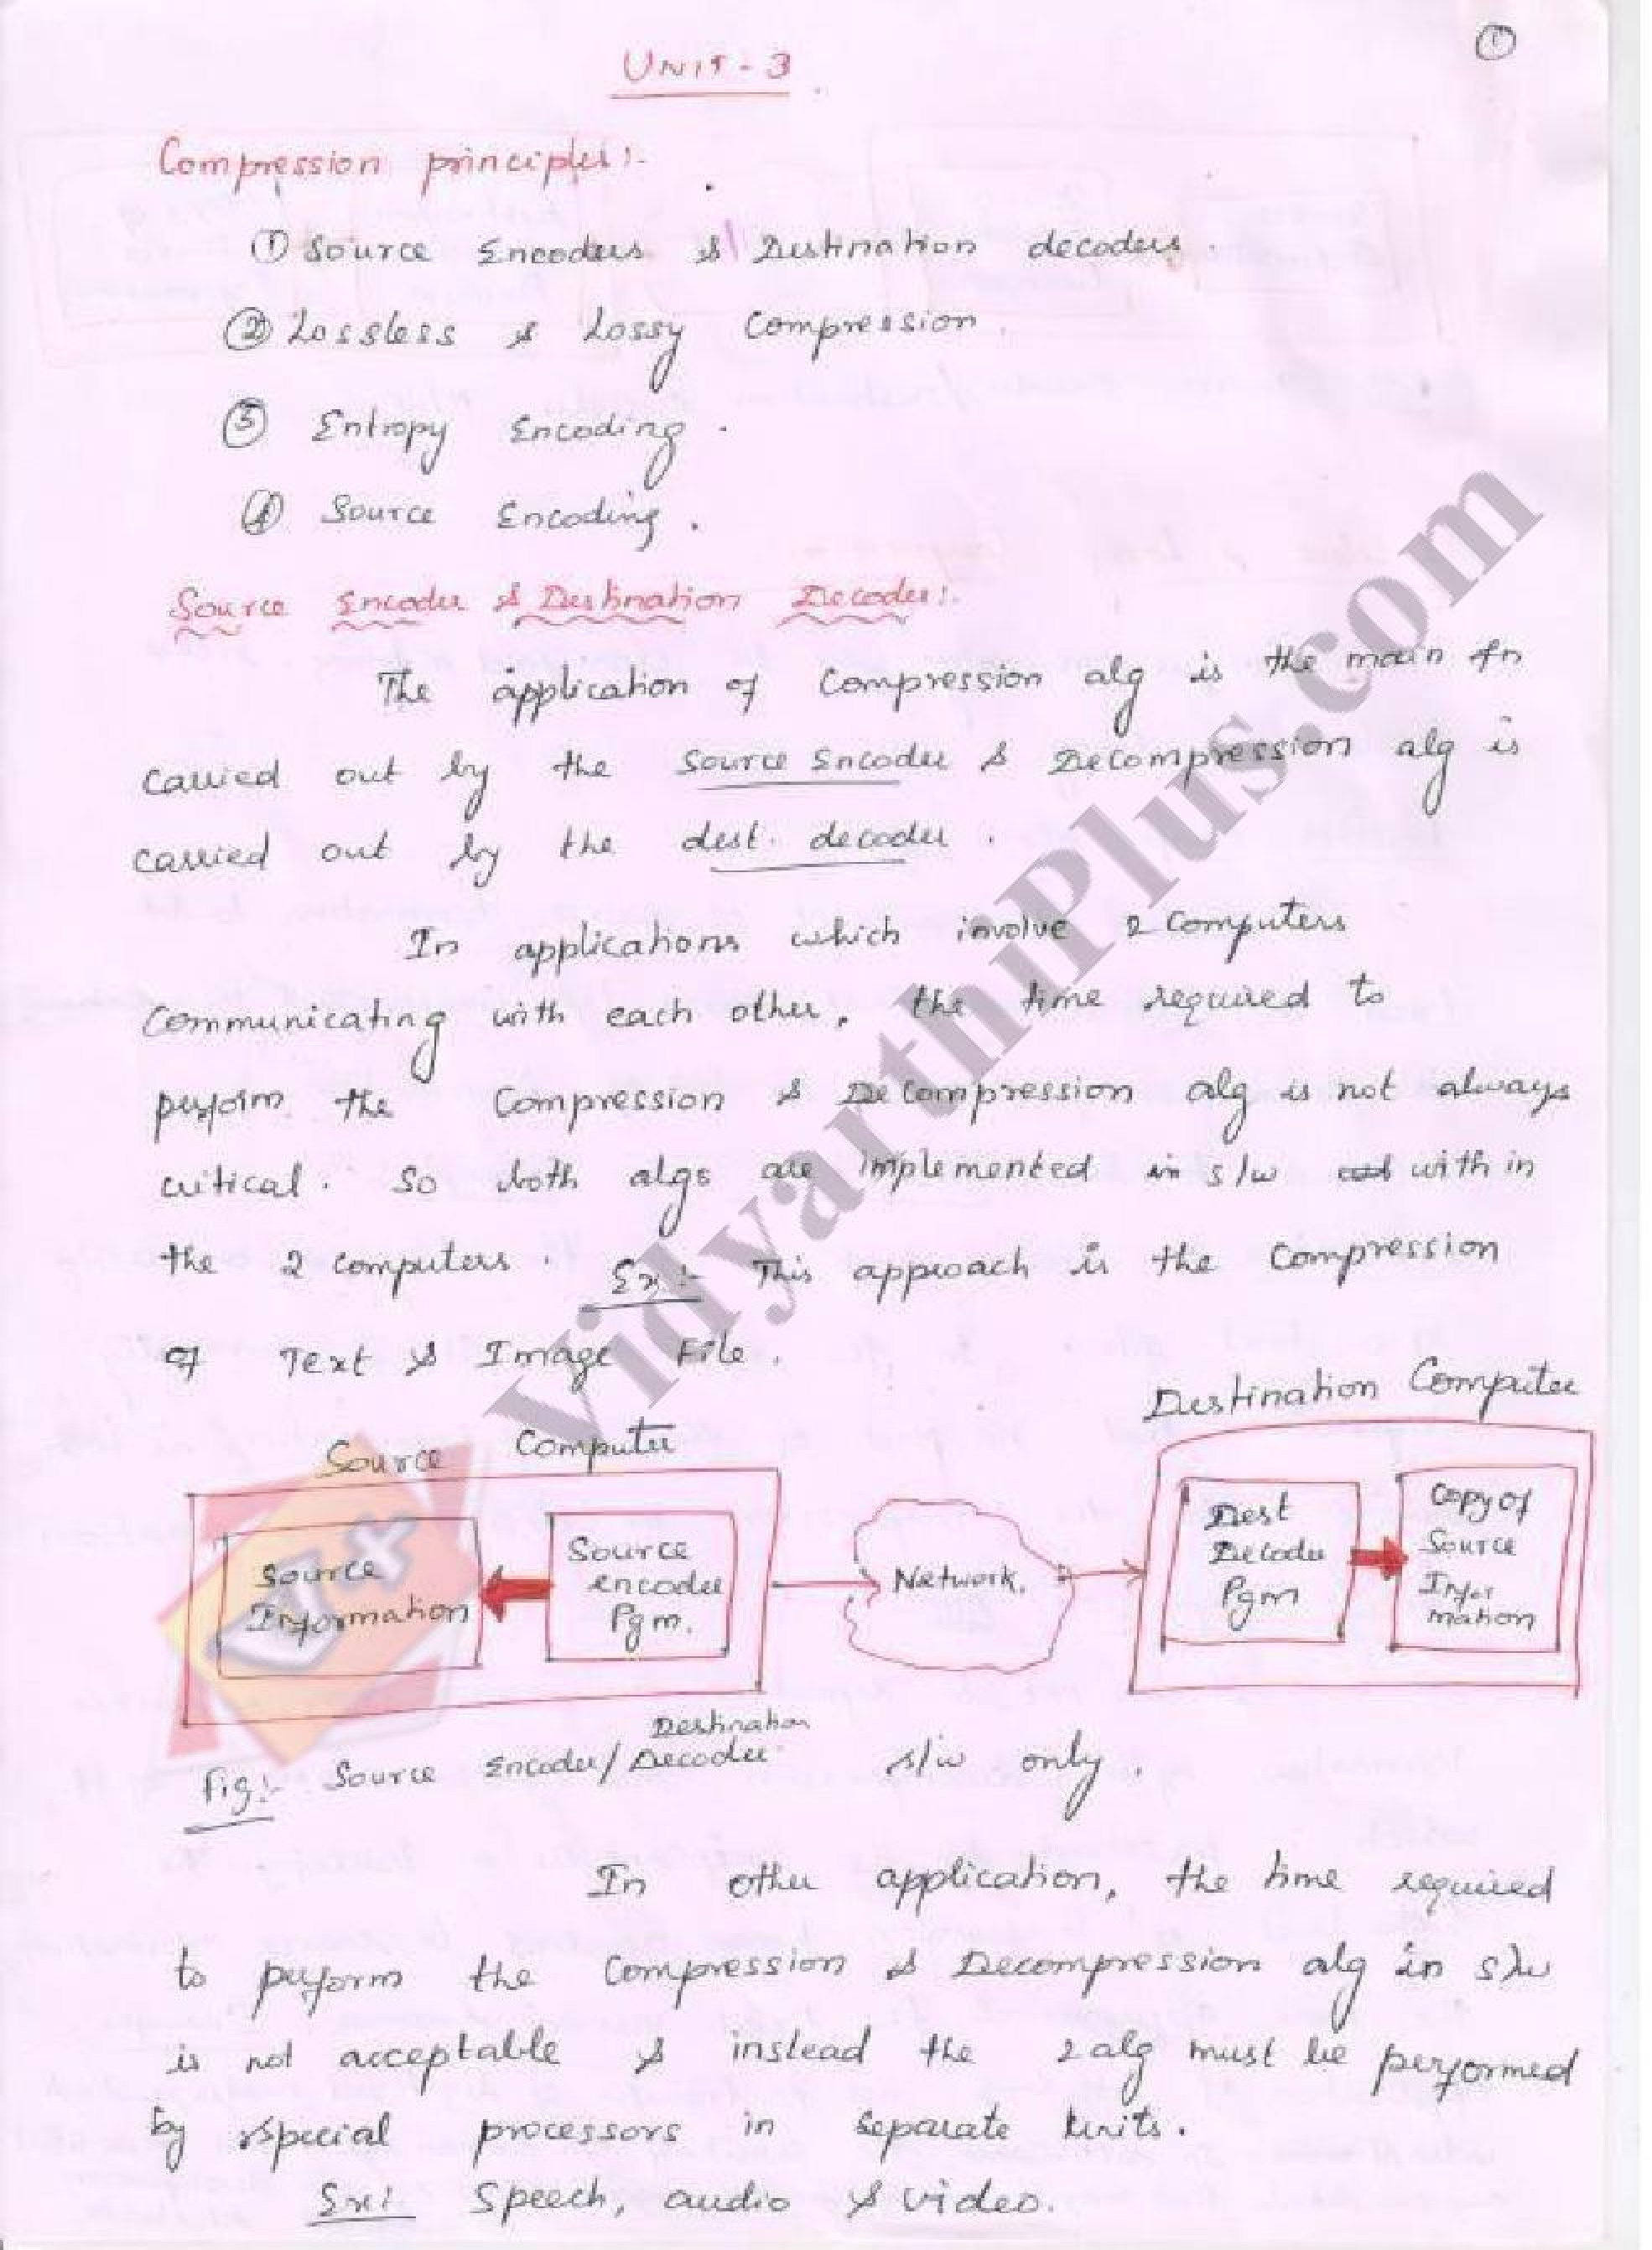 Multimedia compression & communication Premium Lecture Notes - Ashok Edition